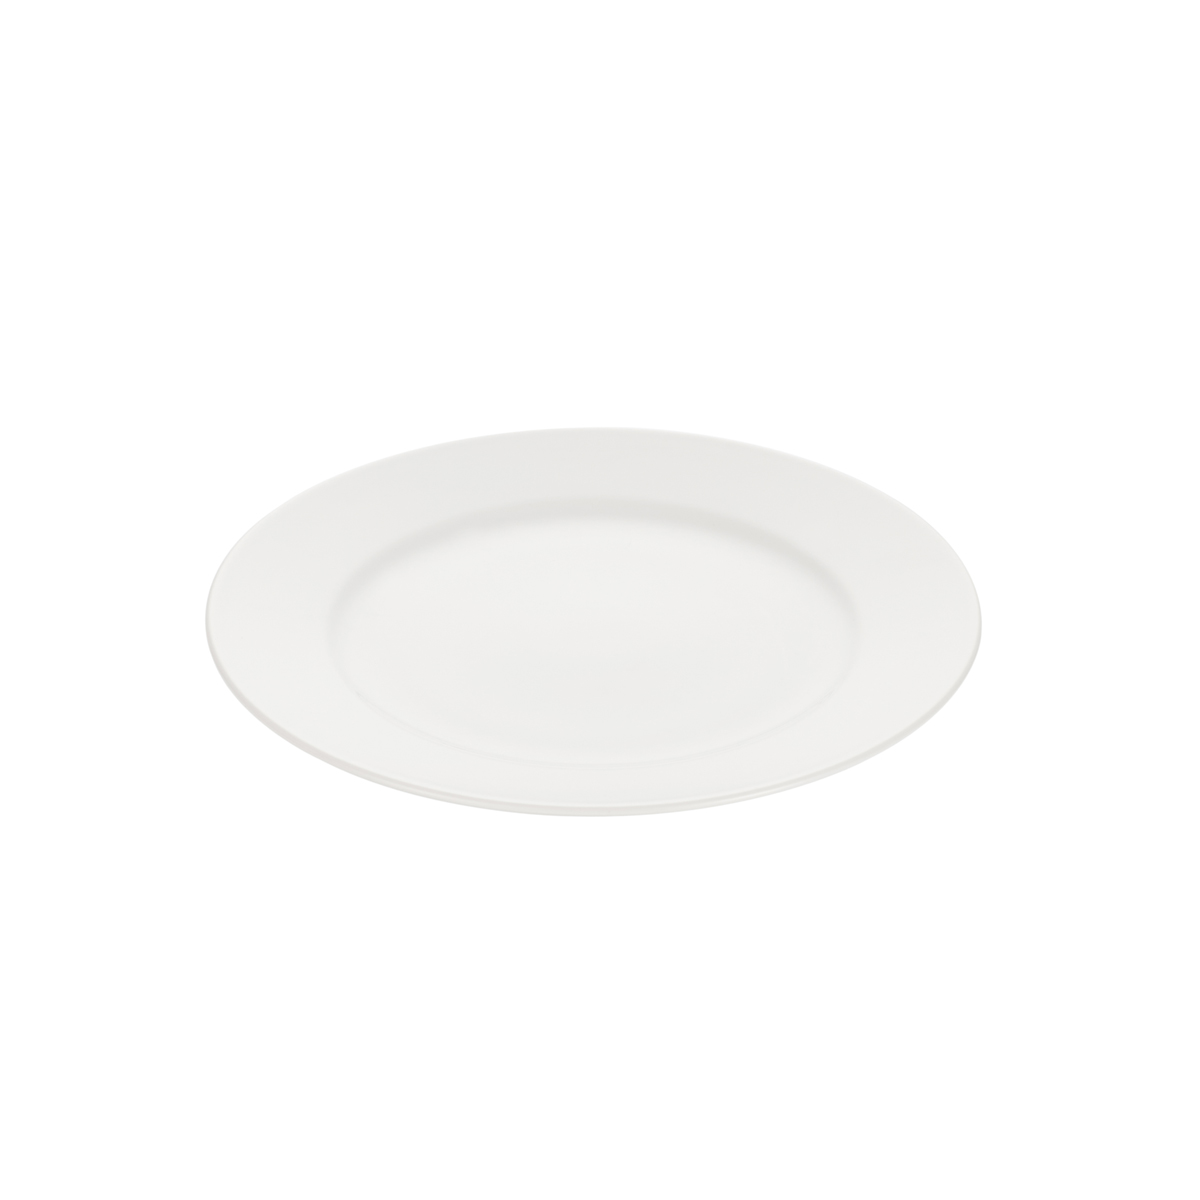 Плоская тарелка Gipfel Classique 50905 25 см тарелка плоская пион 25 см 00000080745 royal aurel